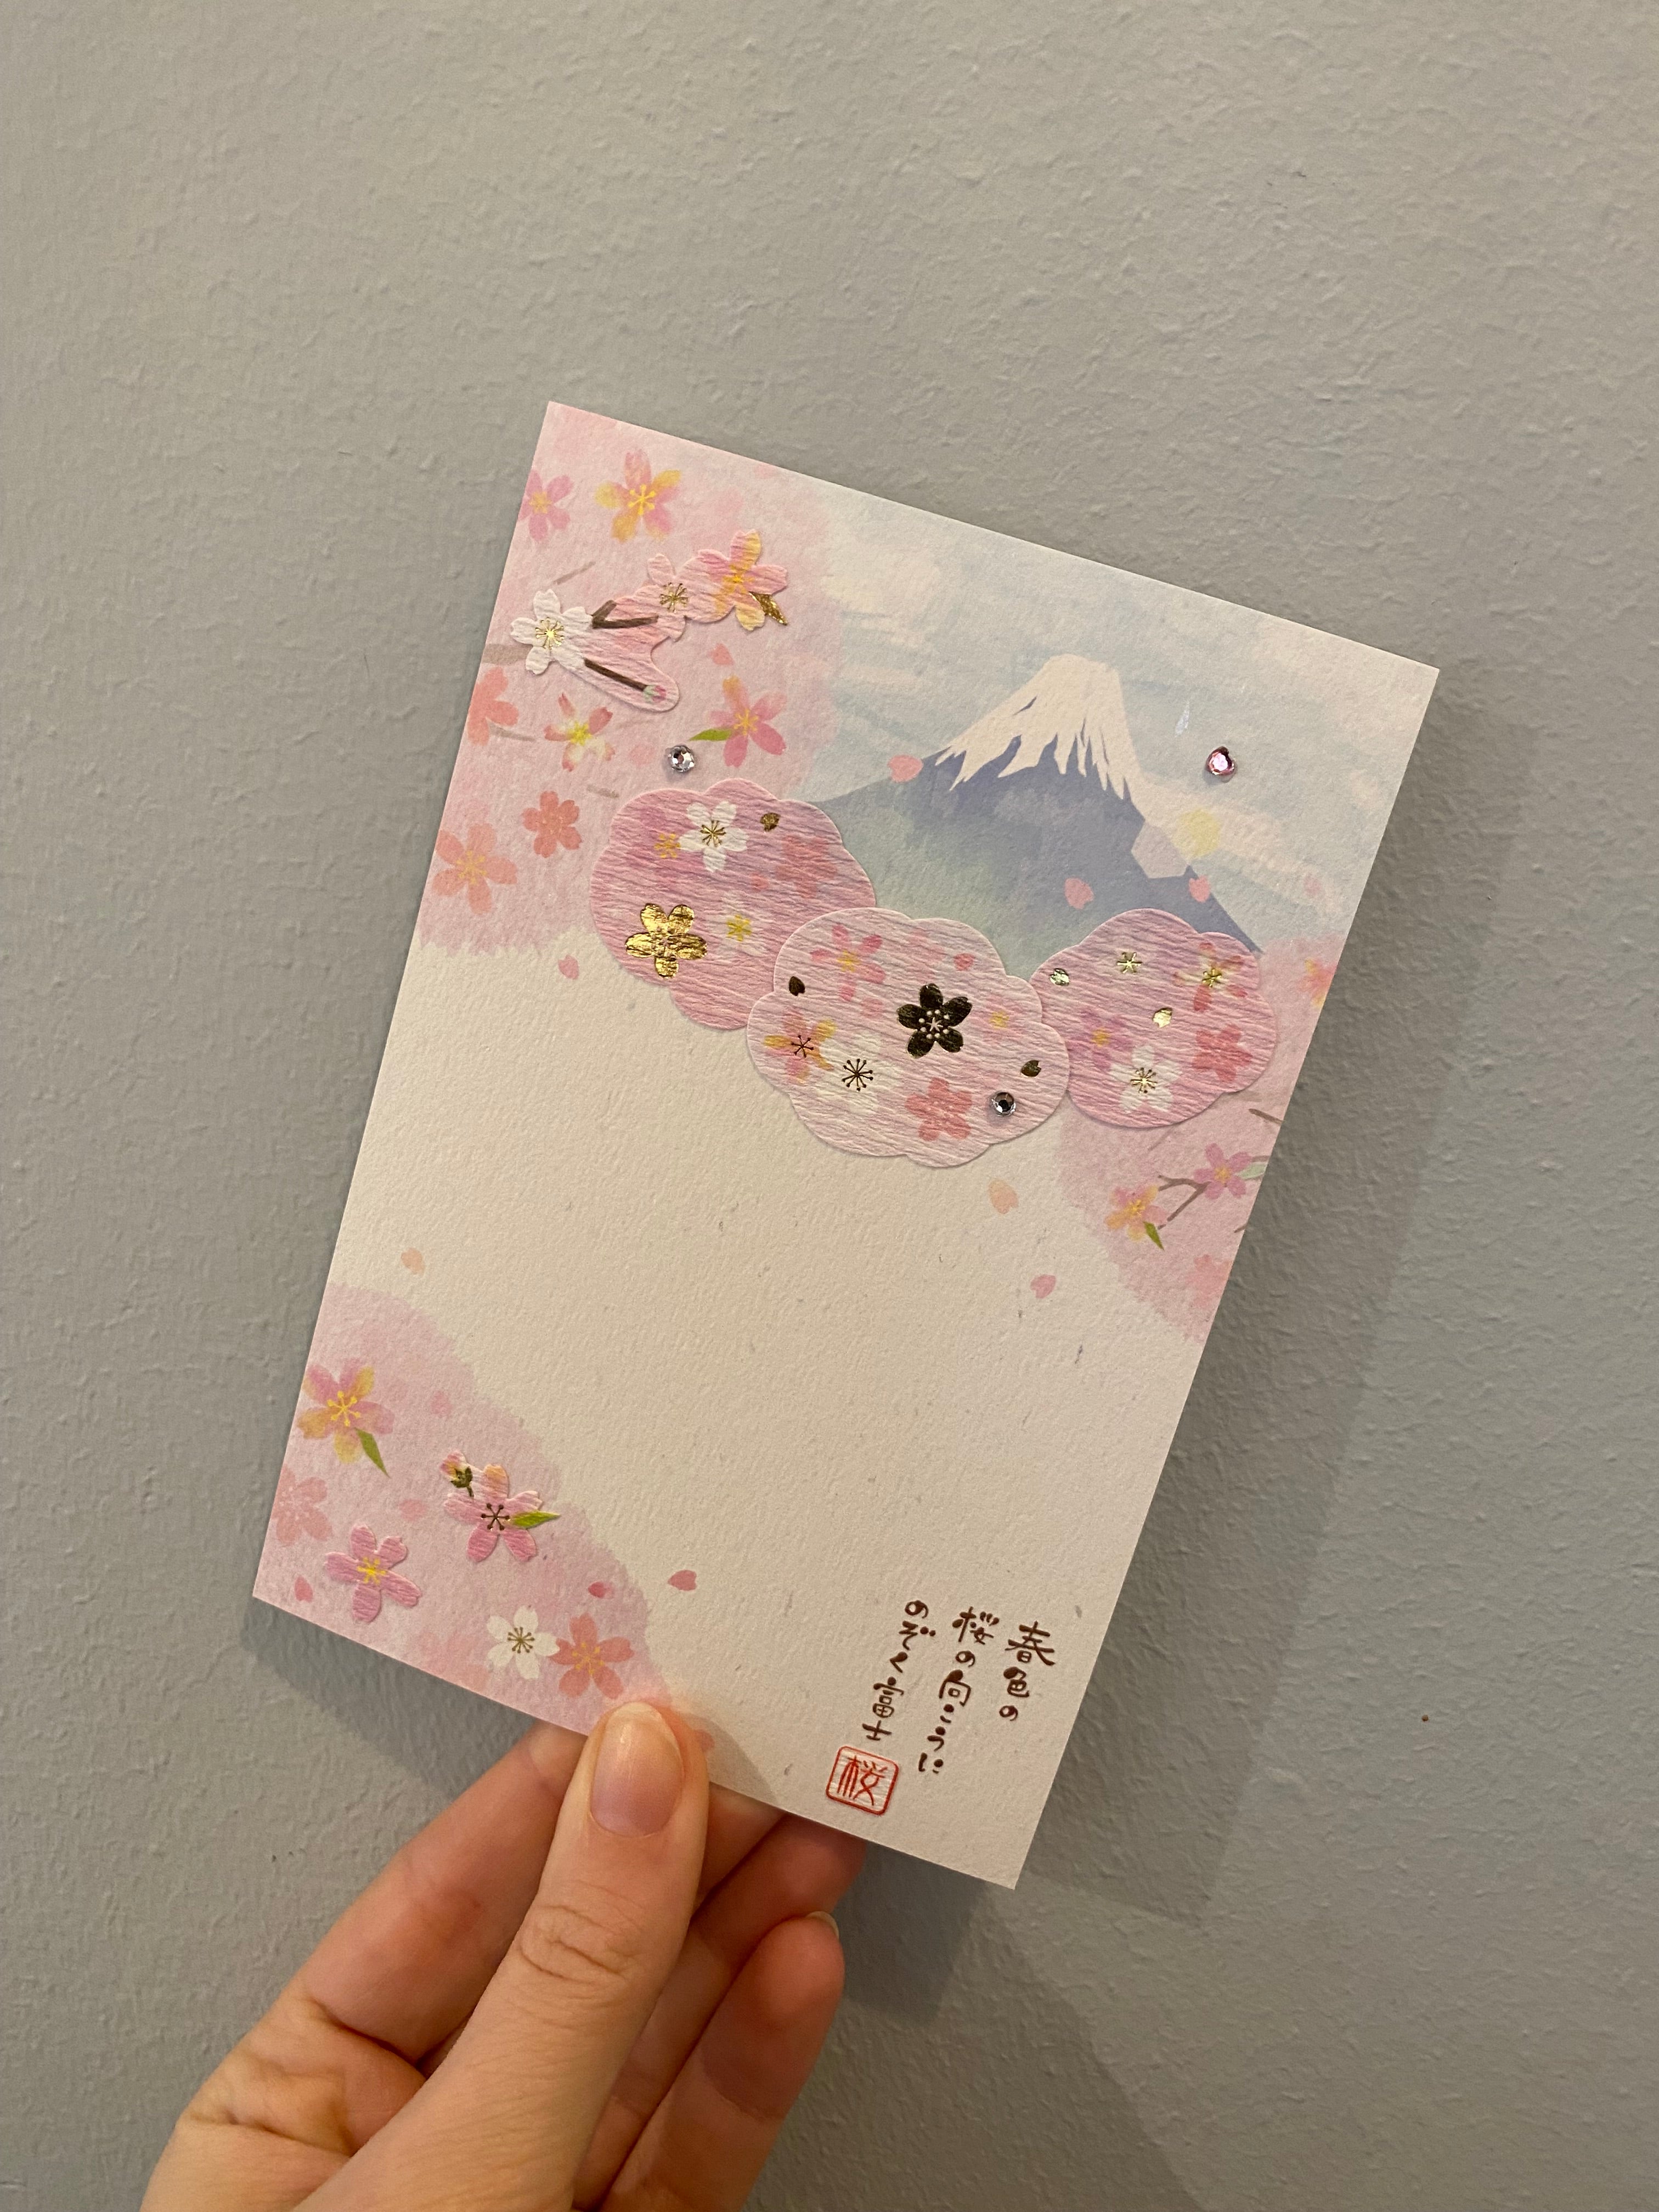 Postcard with Mount Fuji and Sakura flowers